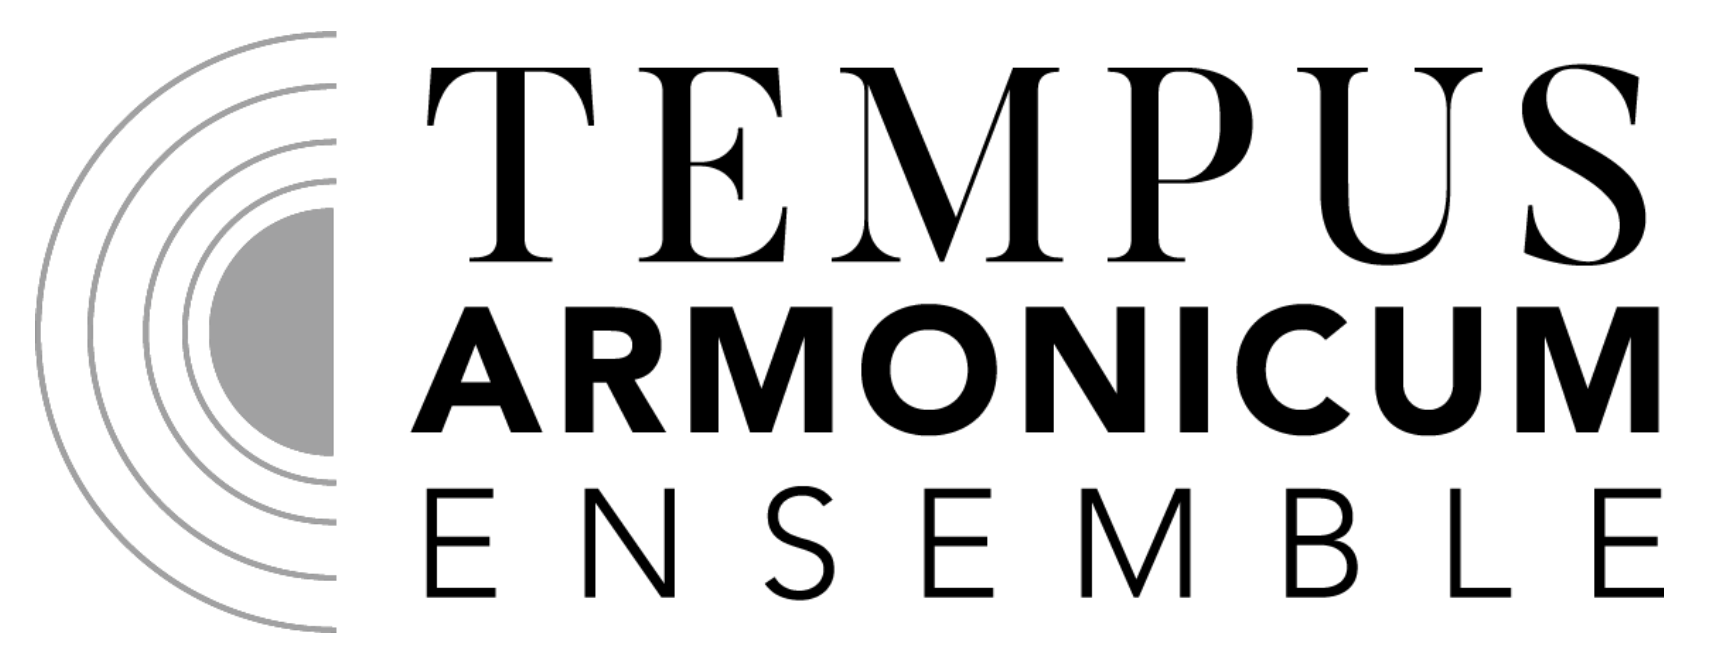 Tempus Harmonicus Ensemble